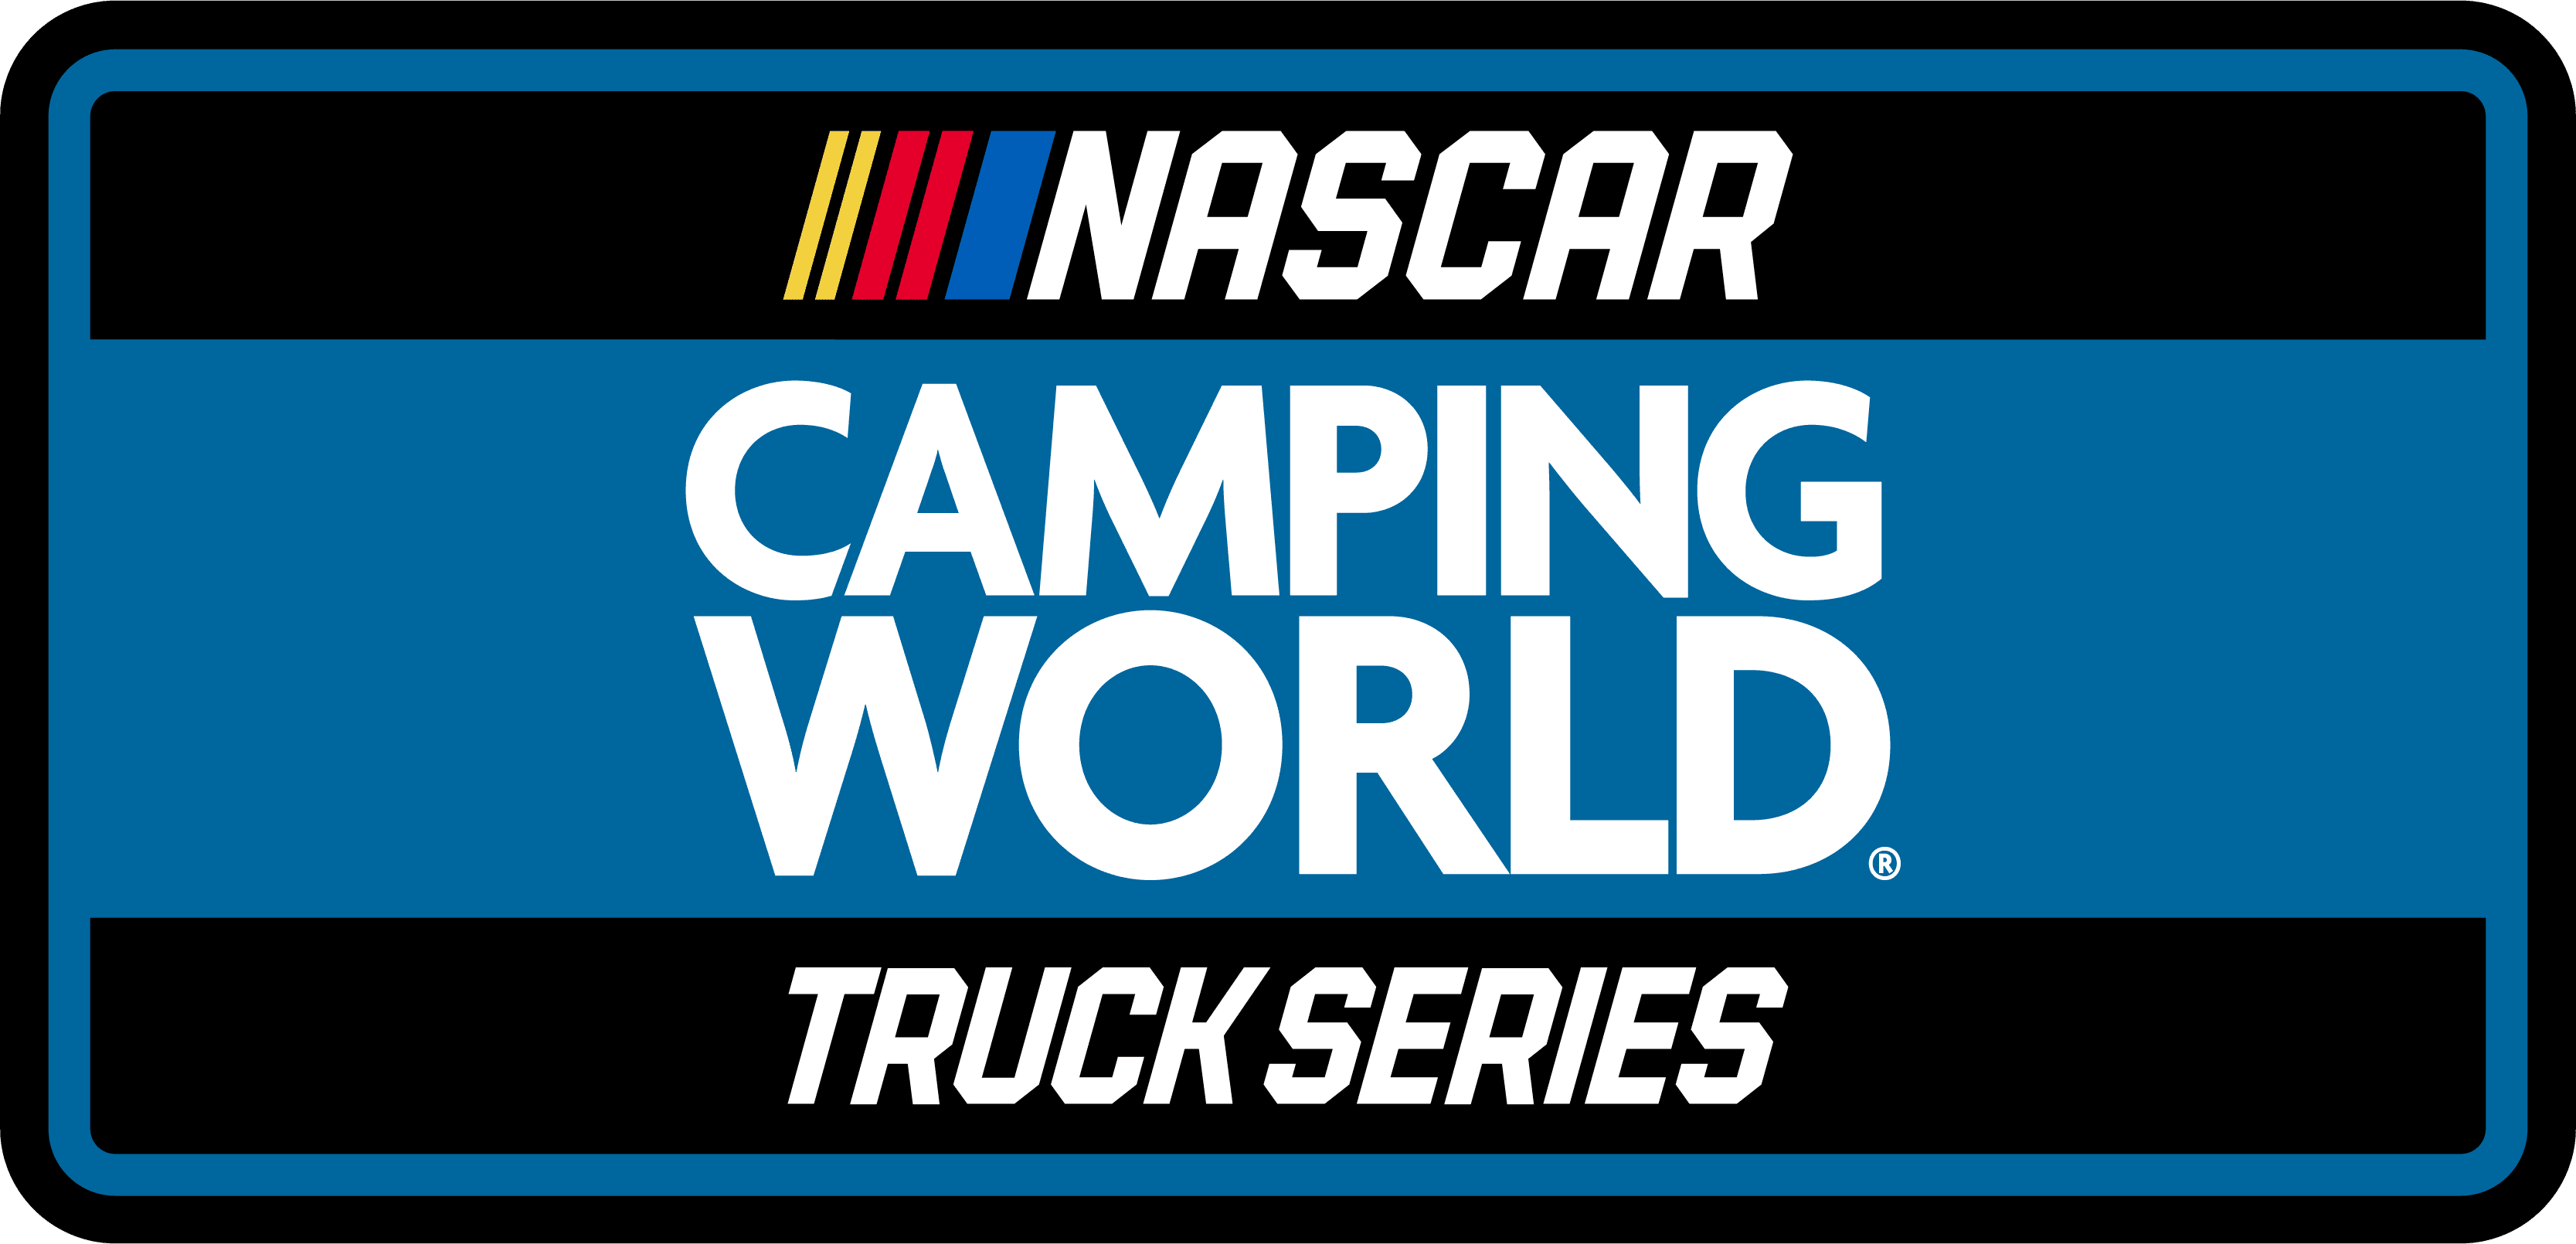 NASCAR Camping World Truck Series - Календарь 2021